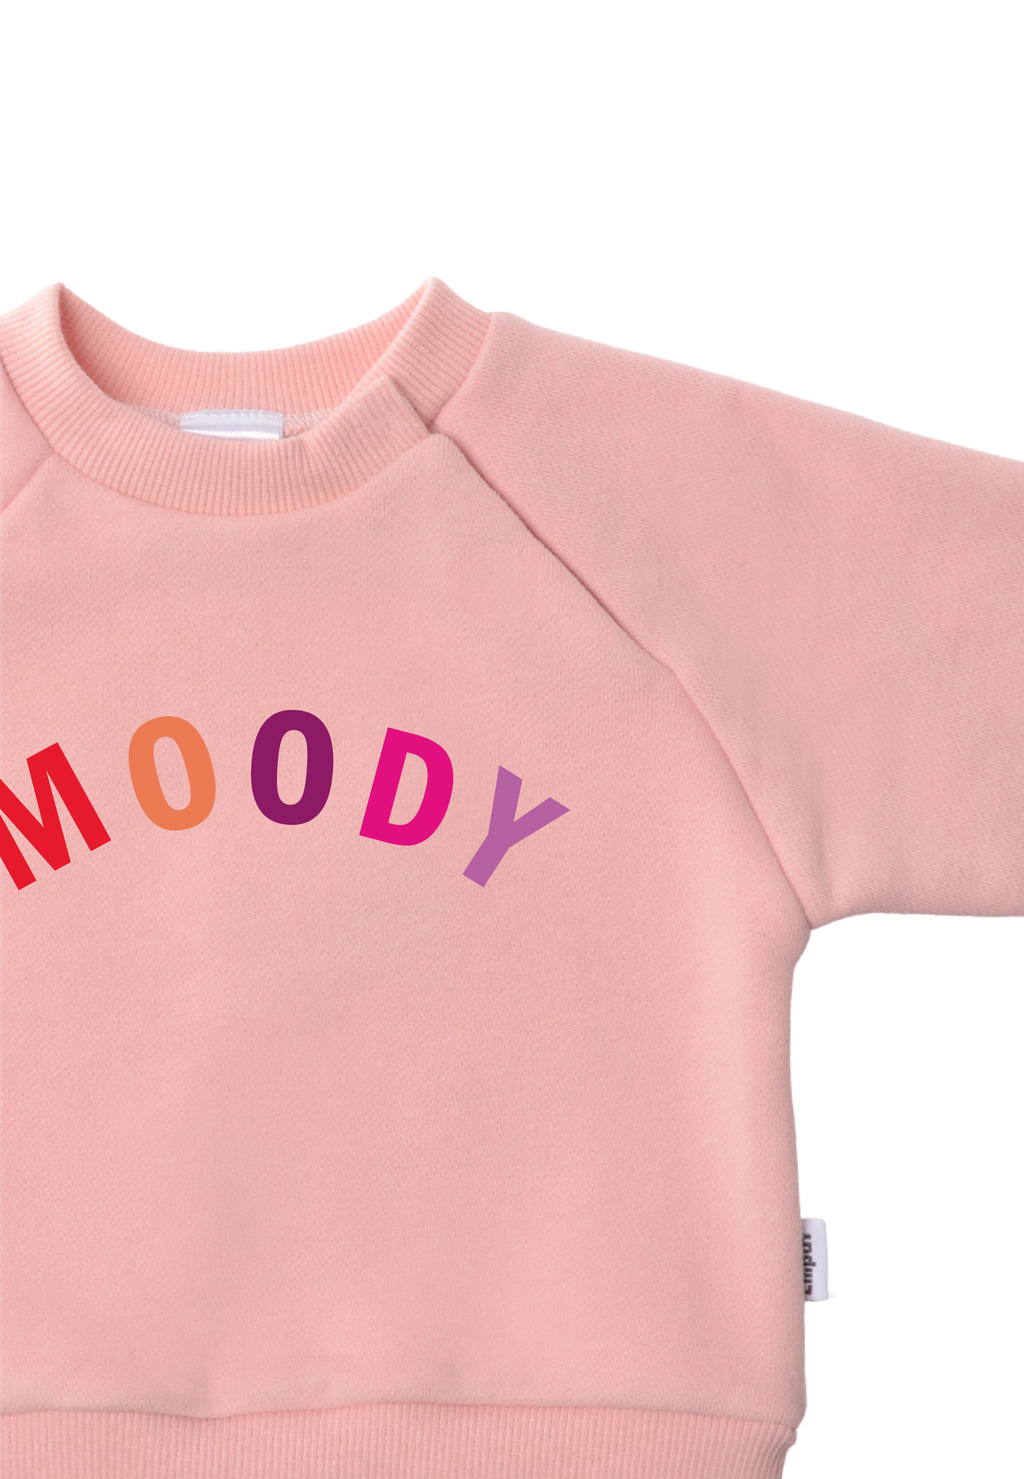 Sweatshirt in rosa mit buntem Wording "MOODY"